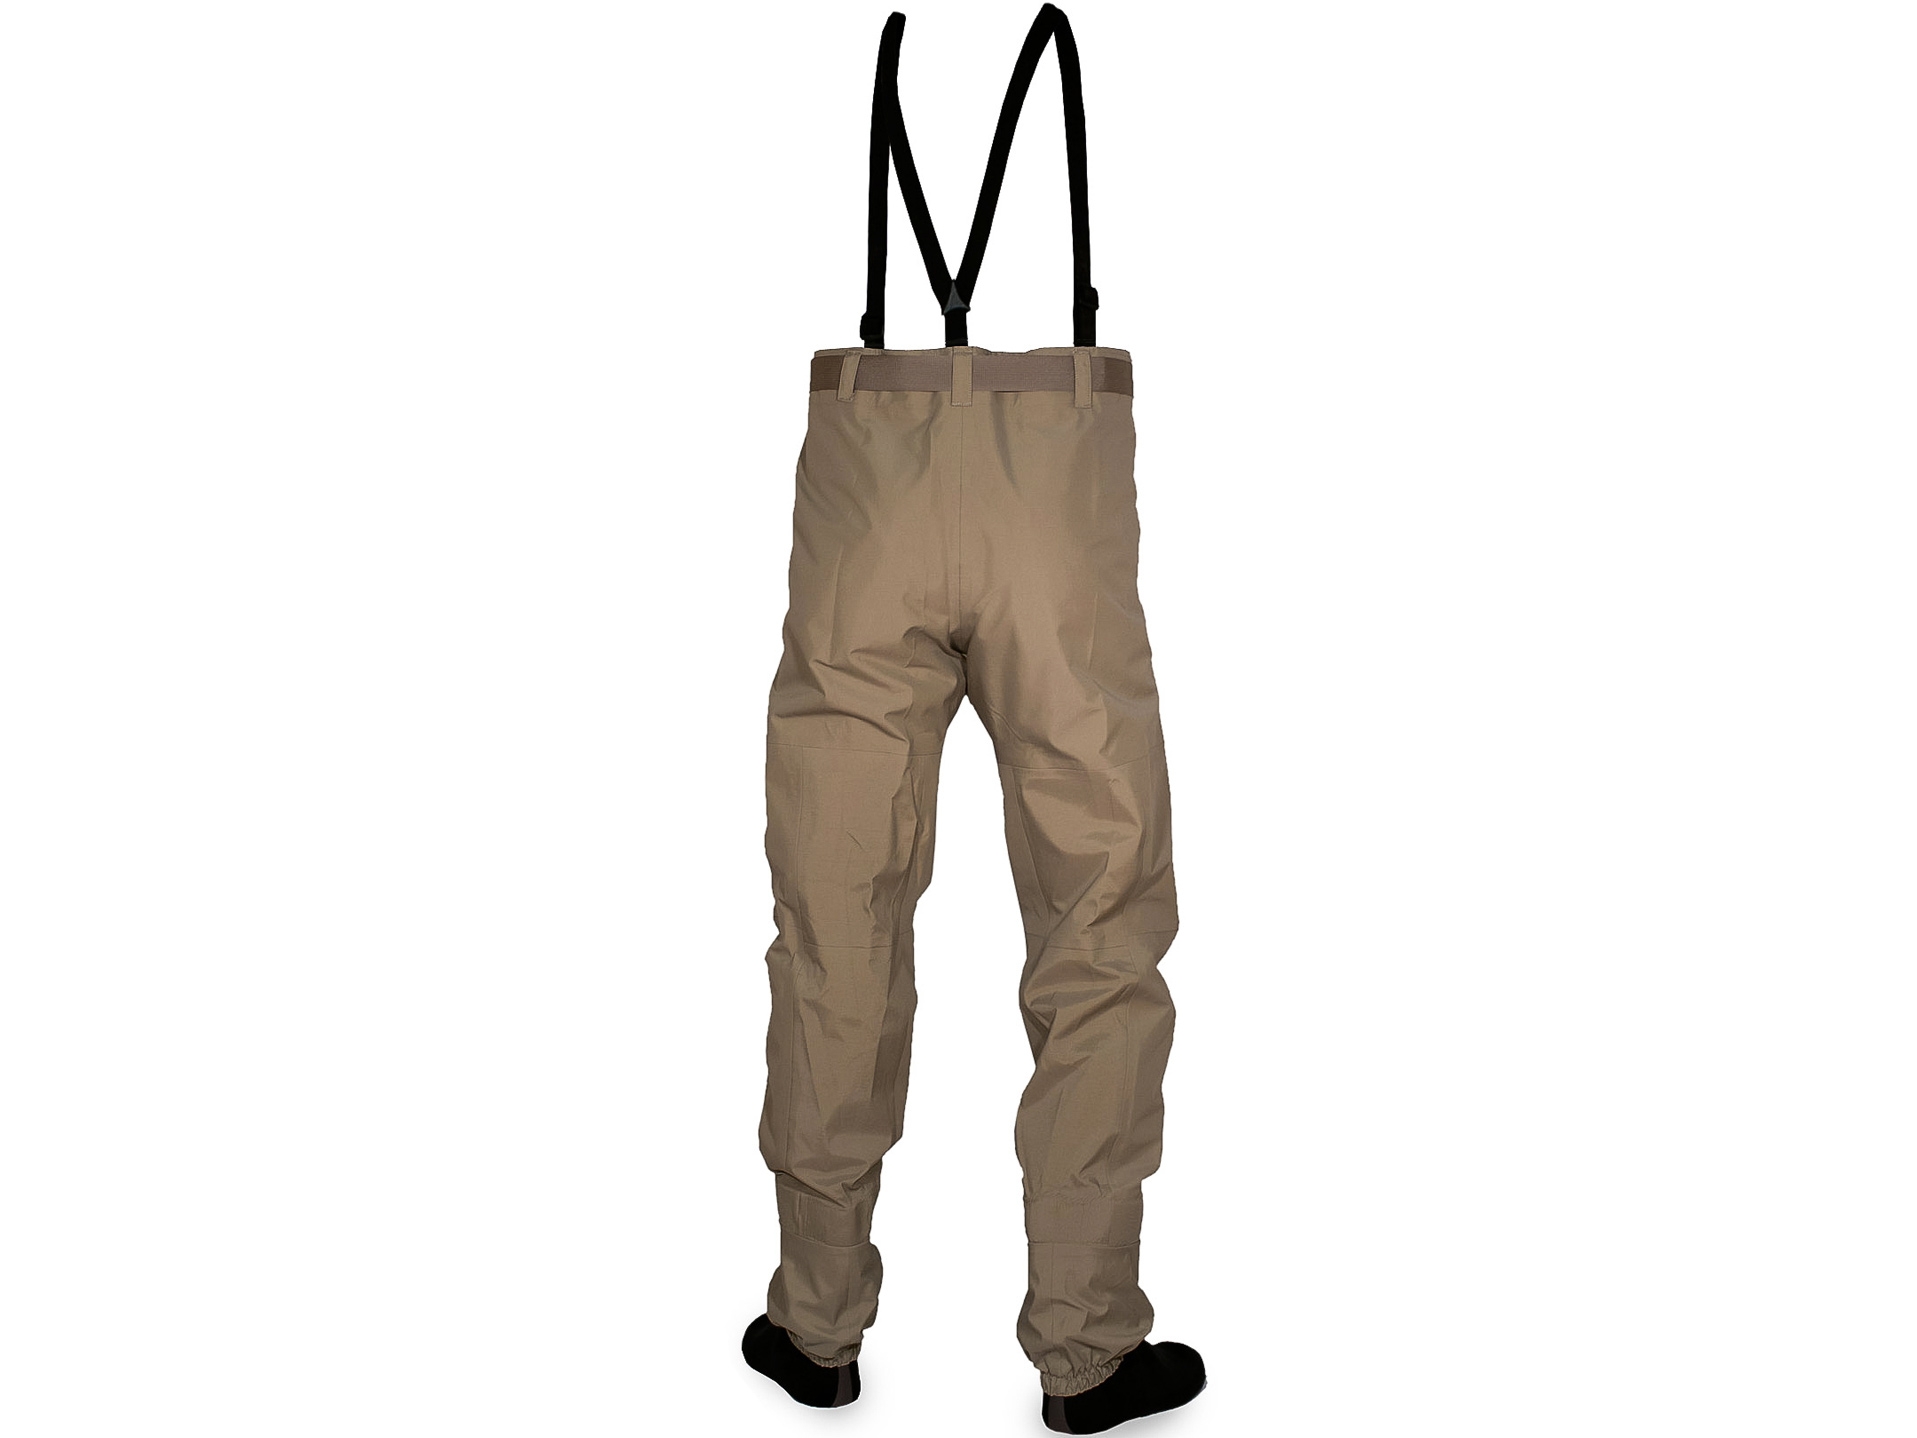 Забродные штаны KOLA-SALMON Concept Waist Waders